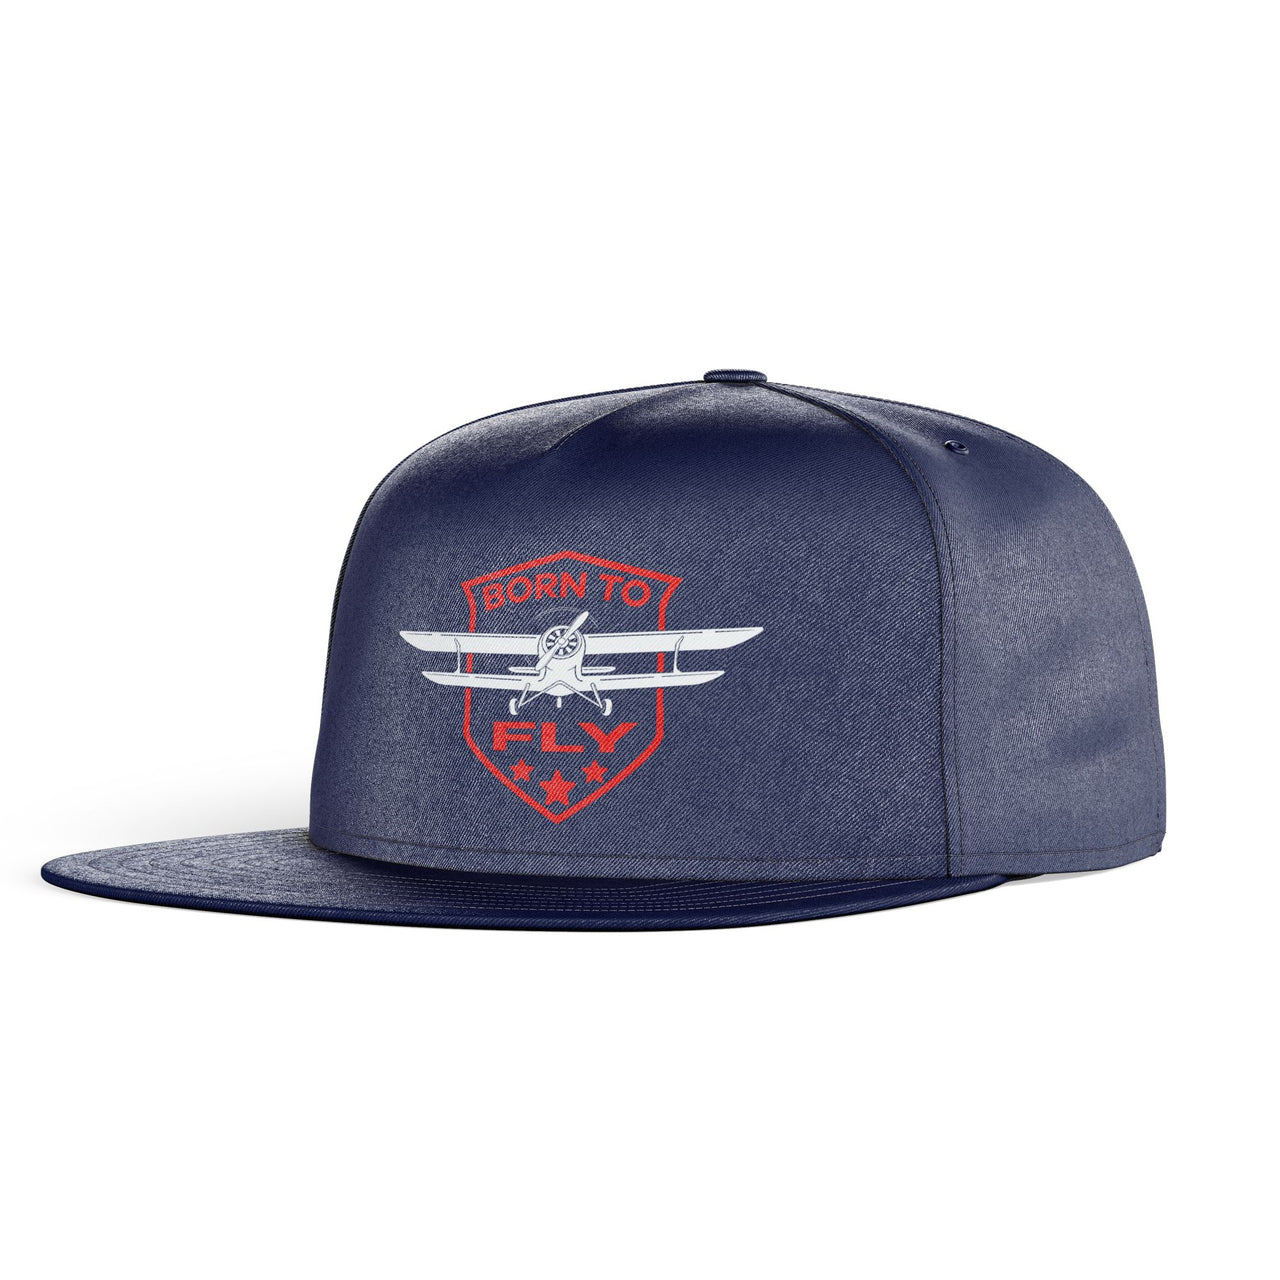 Born To Fly Designed Designed Snapback Caps & Hats